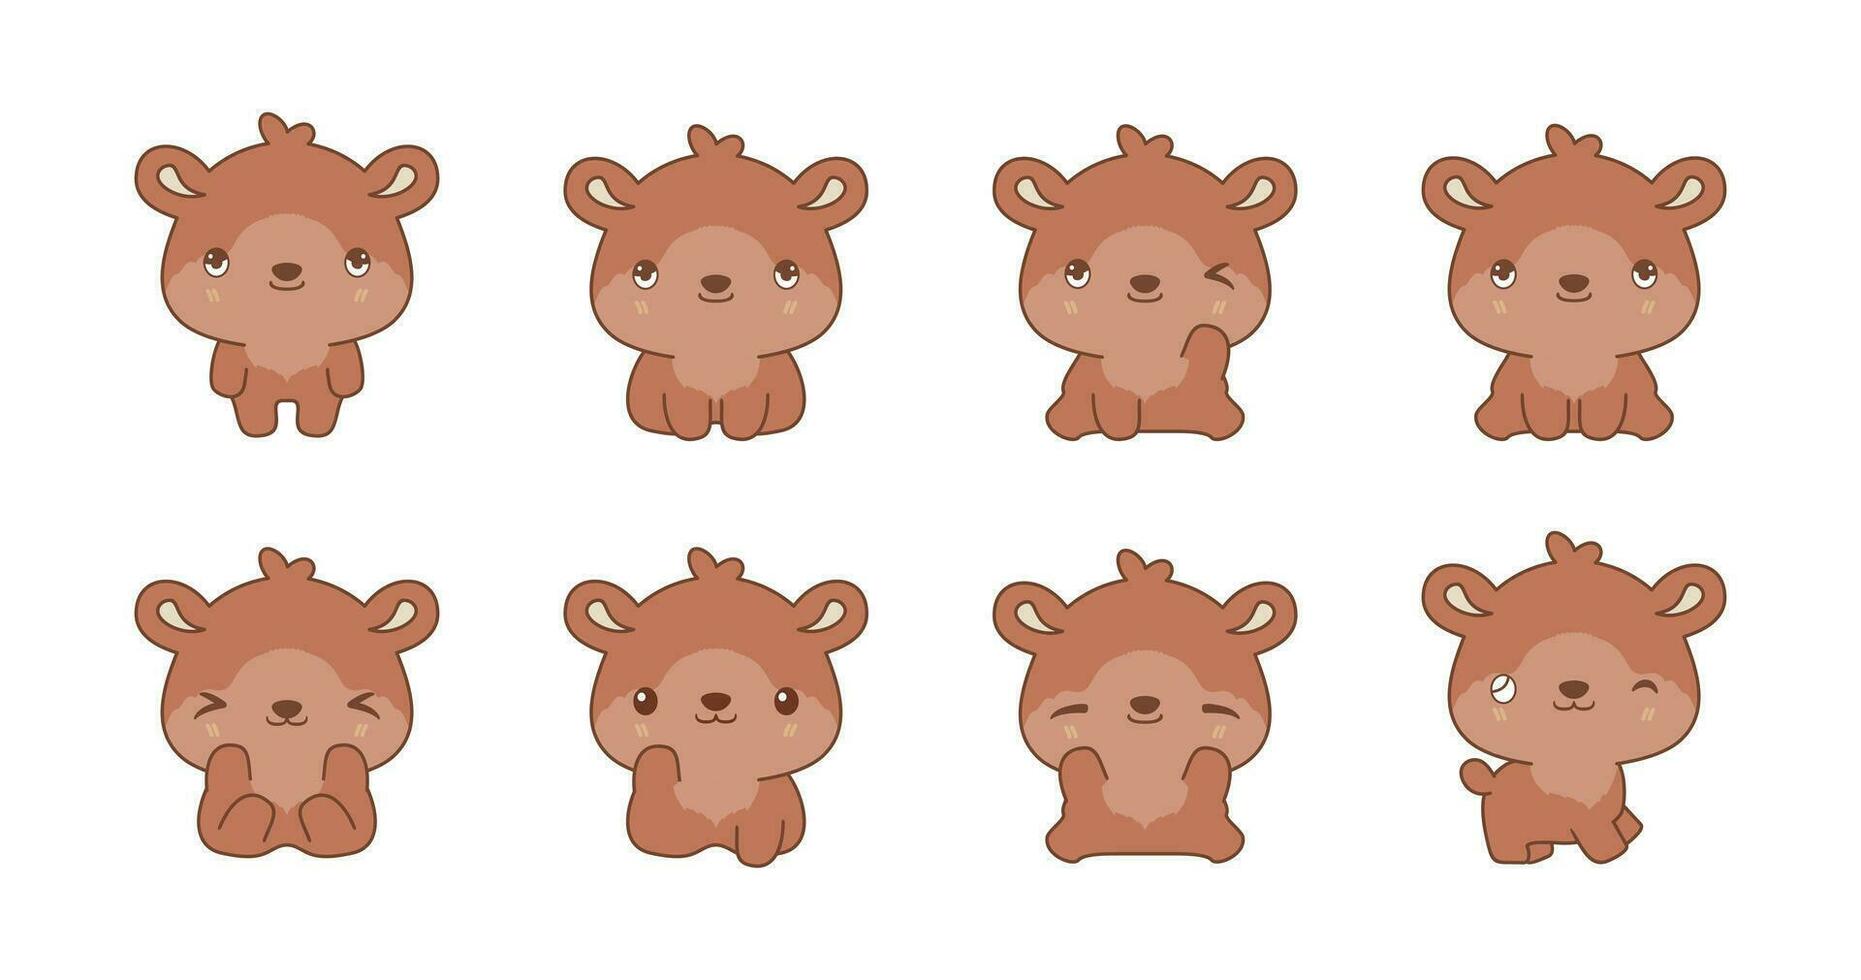 Set of kawaii teddy bear illustration collection vector